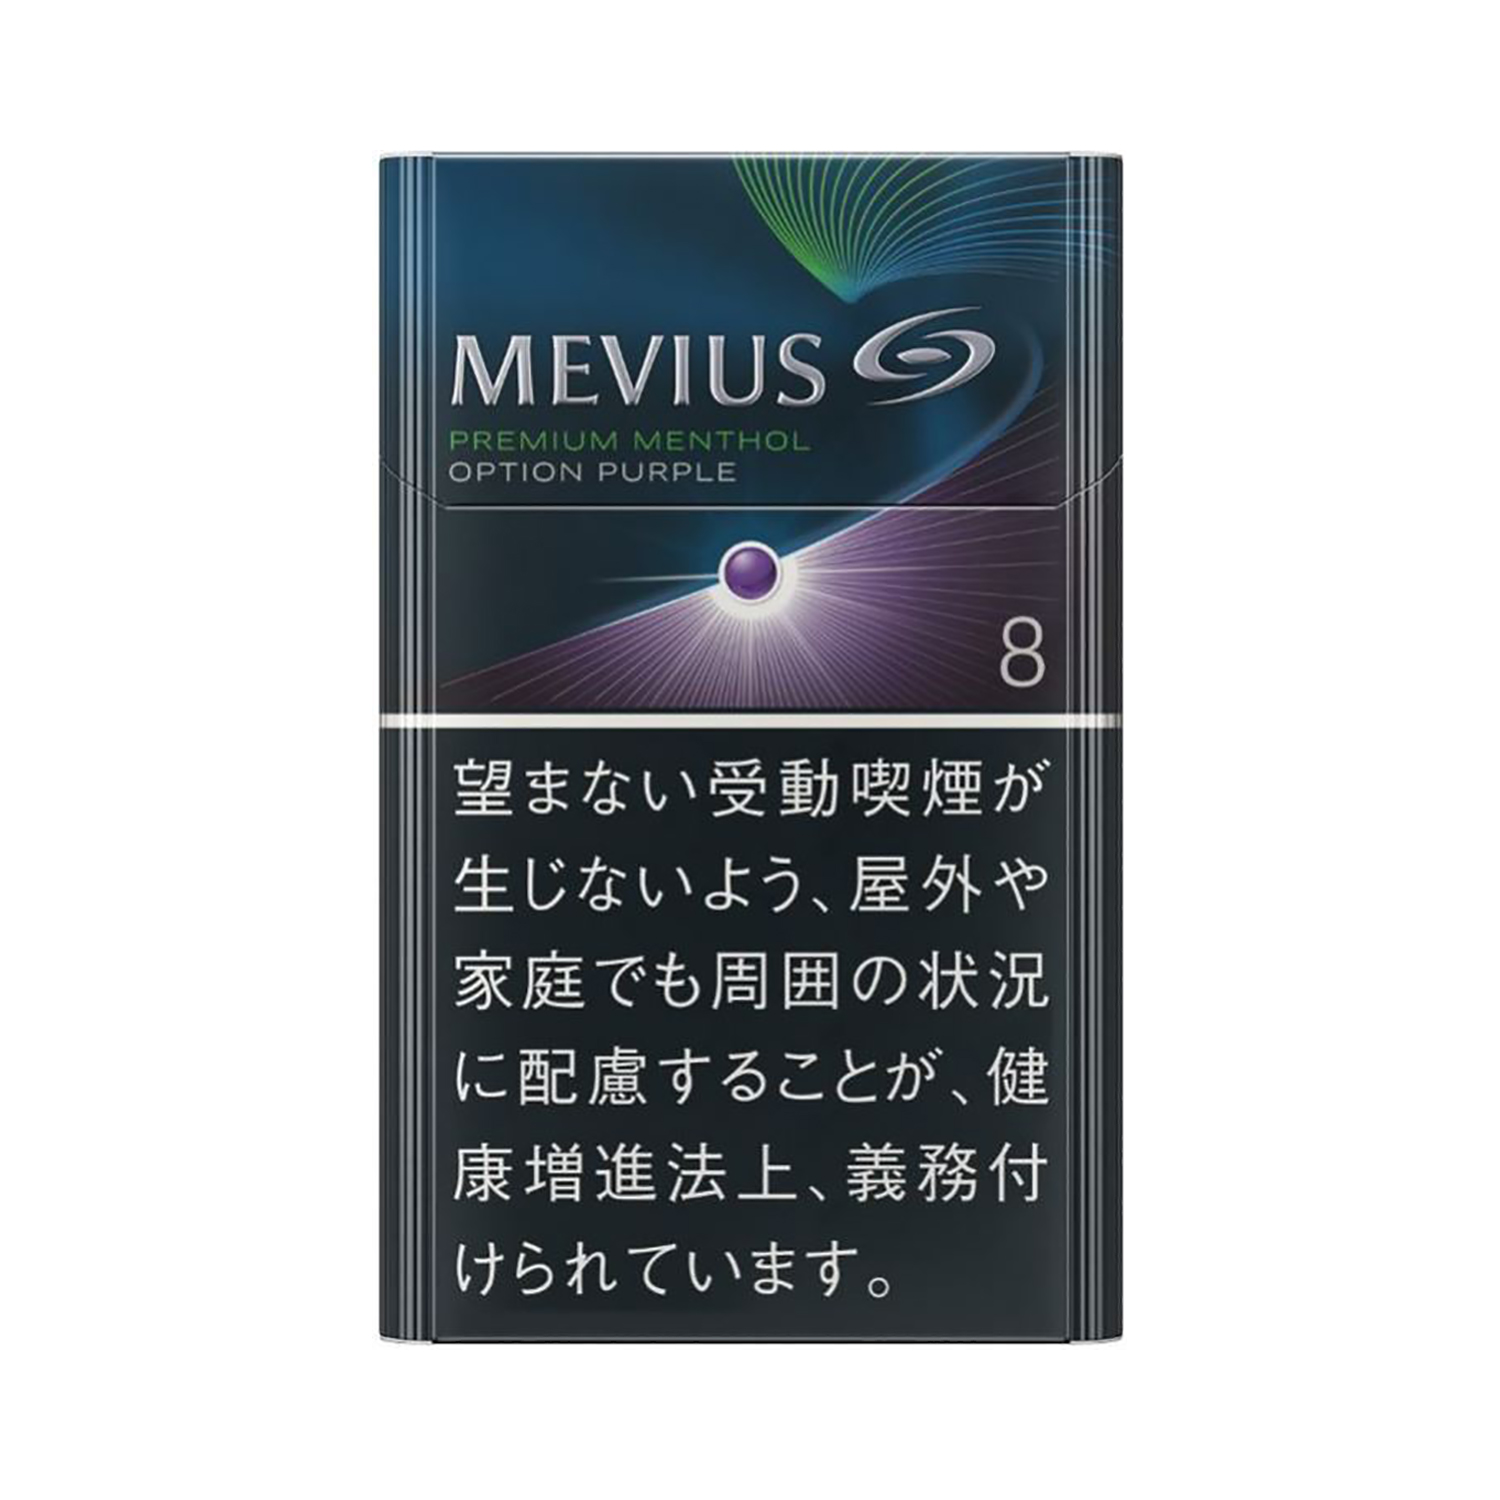 MEVIUS PREMIUM MENTHOL OPTION PURPLE 8 / Tar:8mg Nicotine:0.7mg